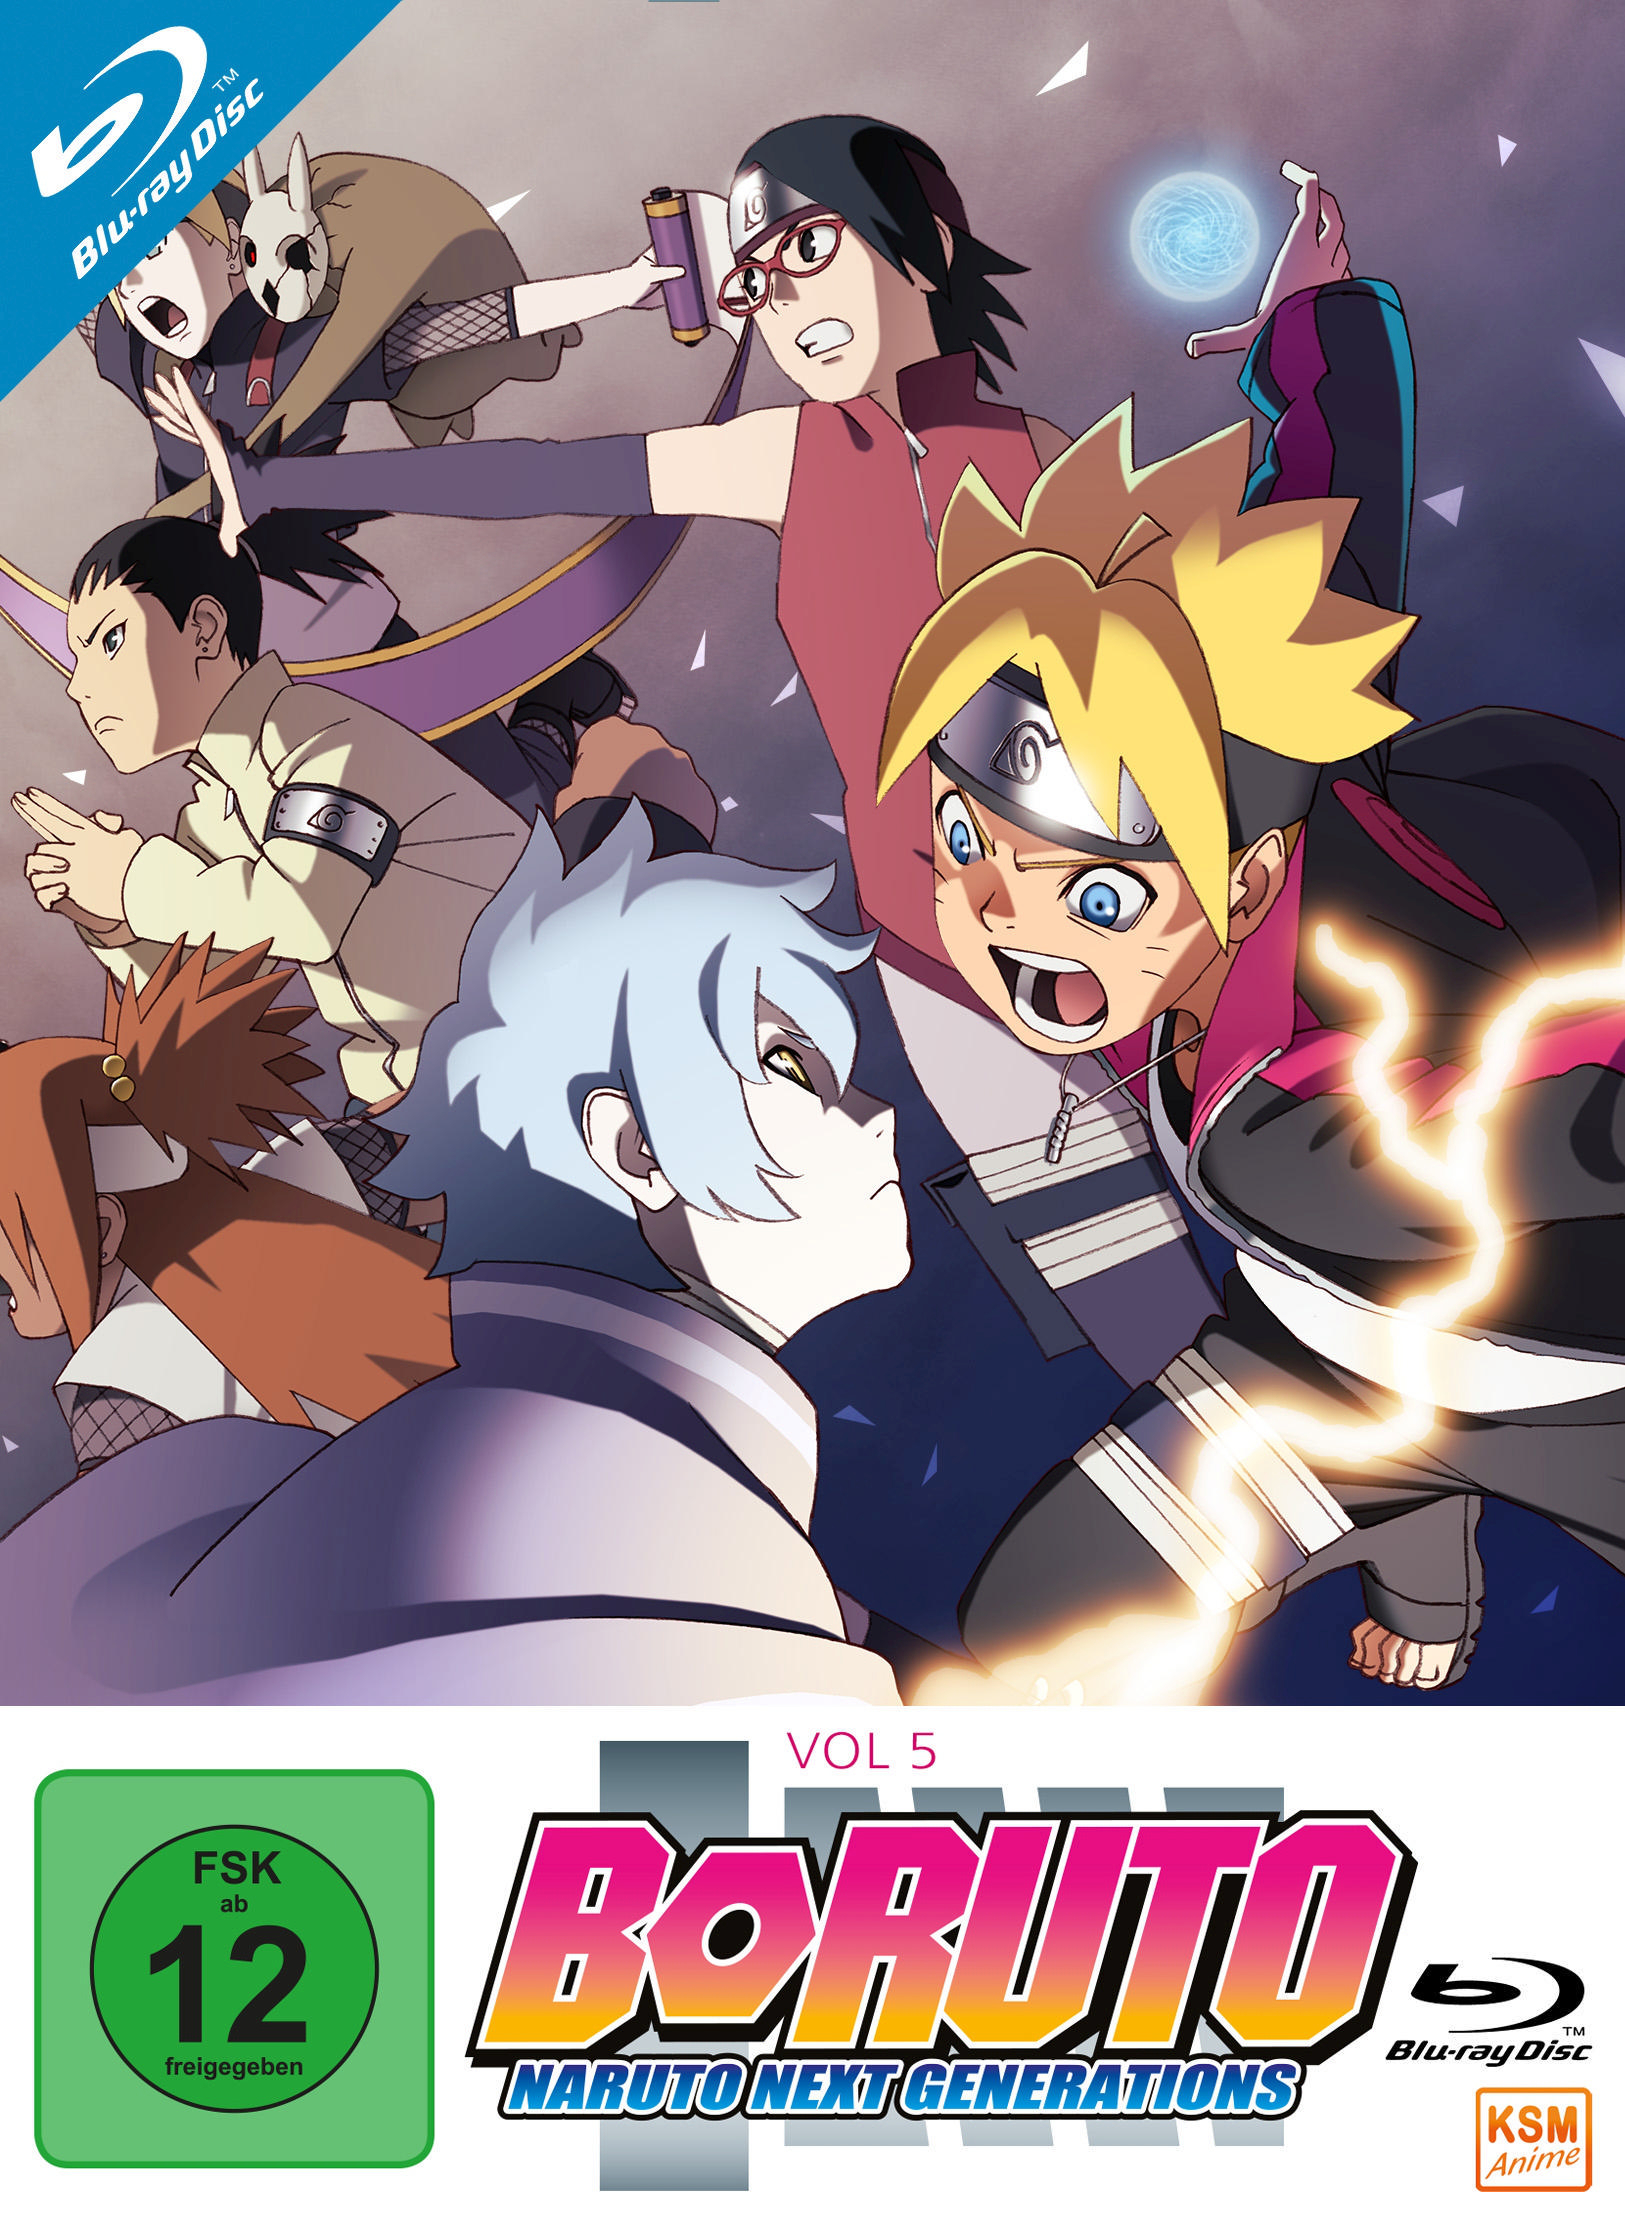 5 Boruto: Volume Generations Next - Naruto Blu-ray (Episode 71-92)